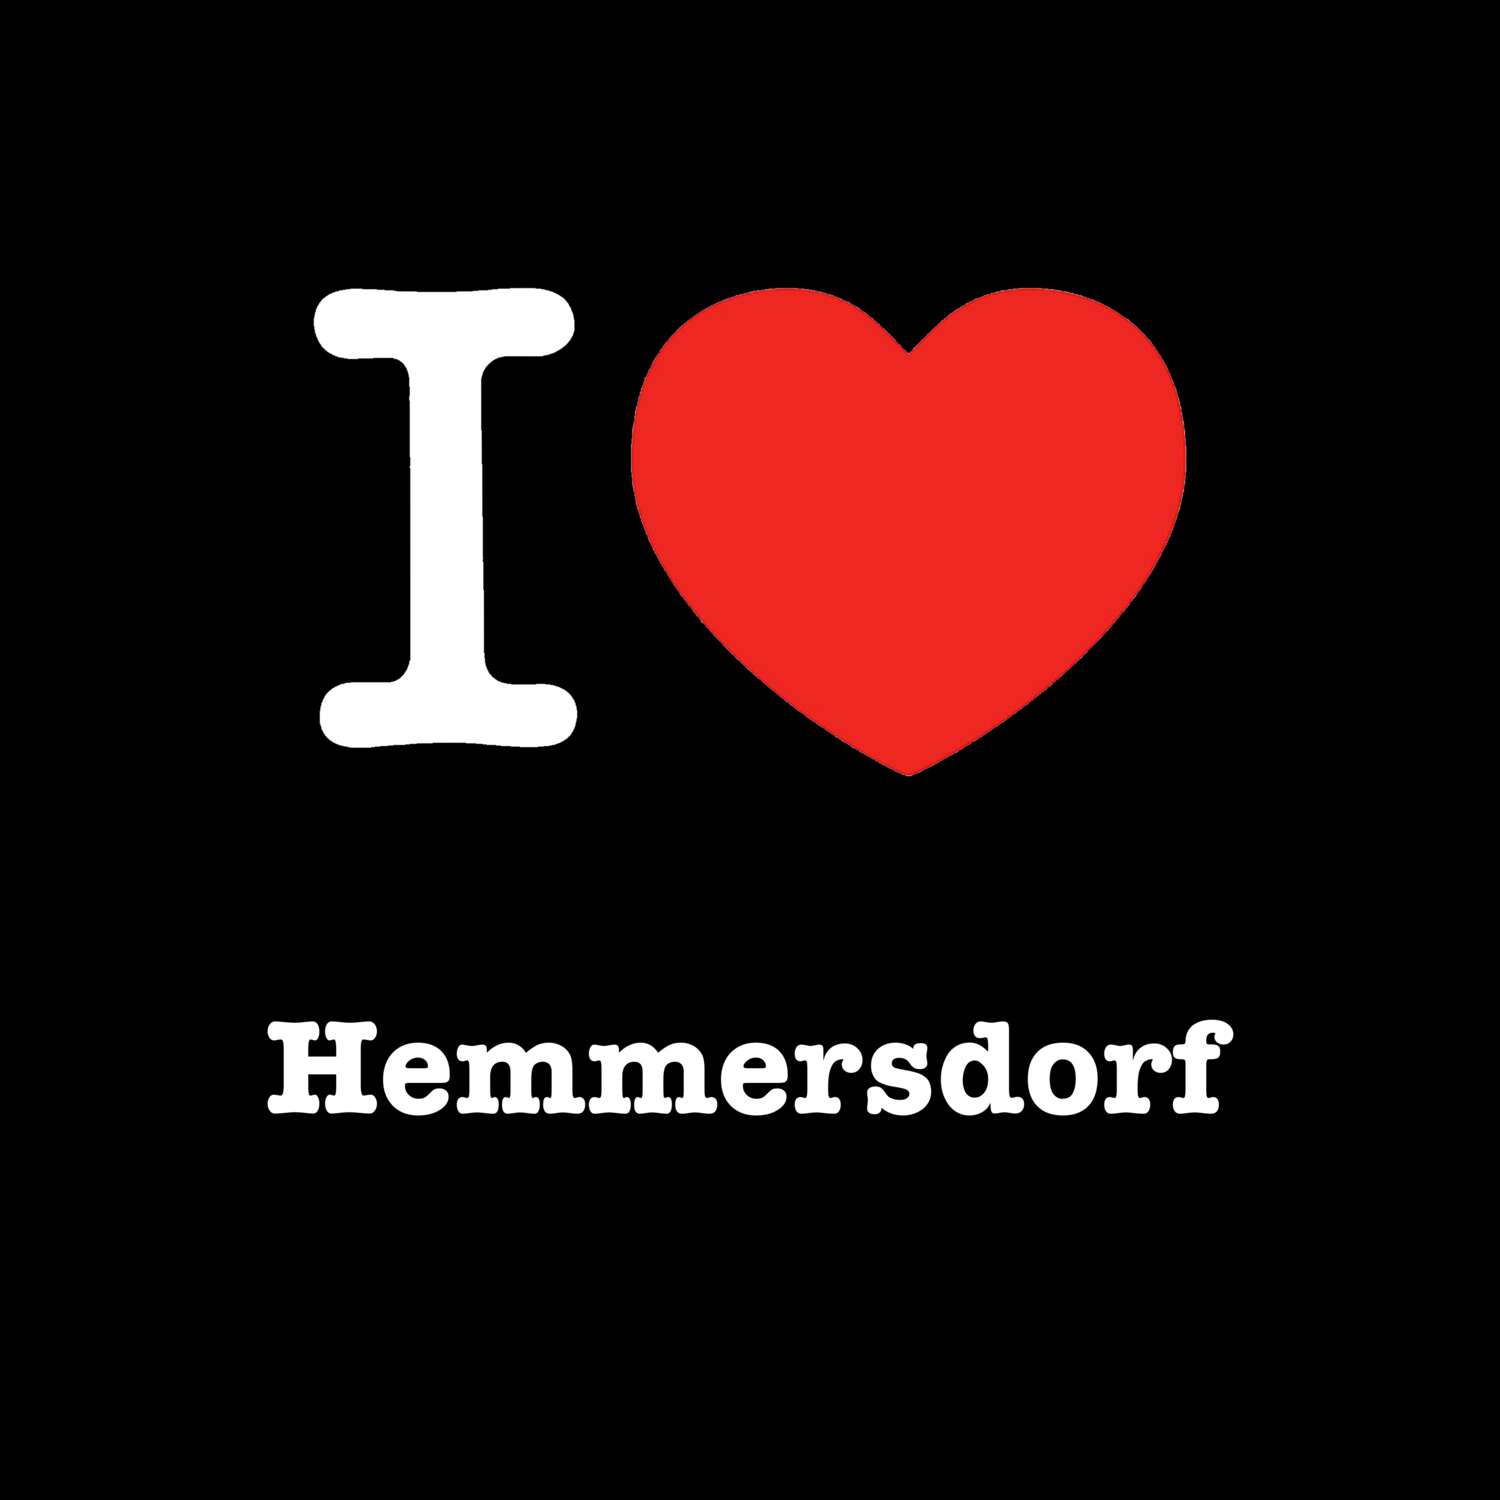 Hemmersdorf T-Shirt »I love«